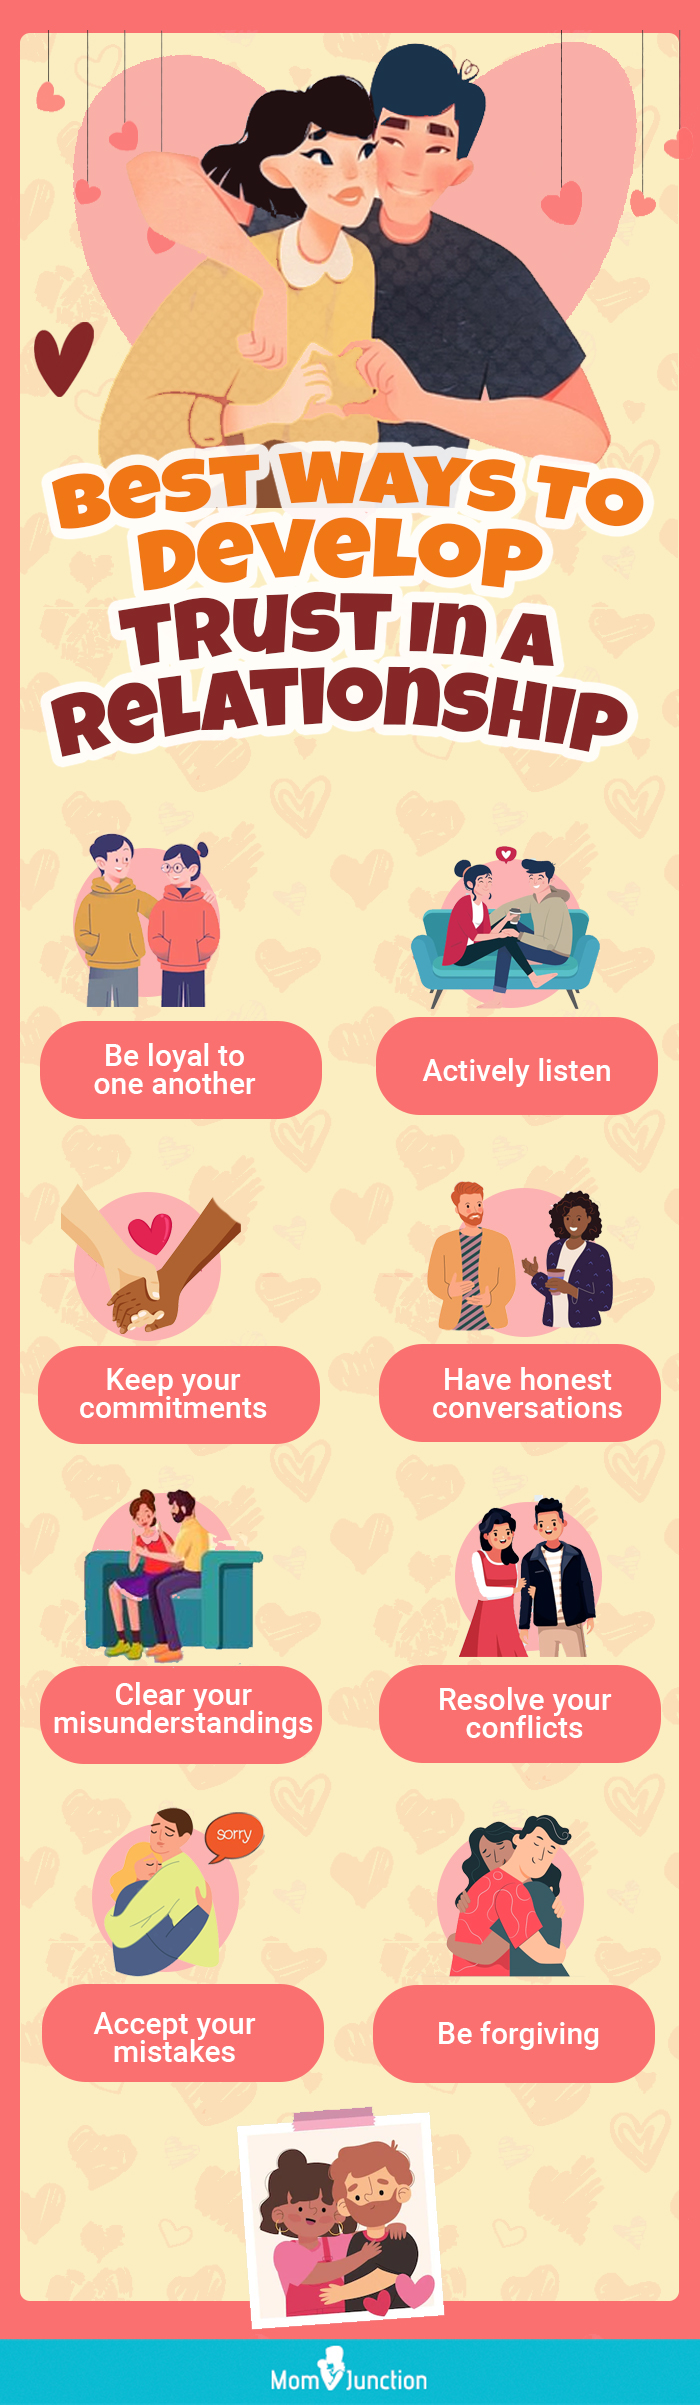 Best Ways to Develop Trust in a Relationship